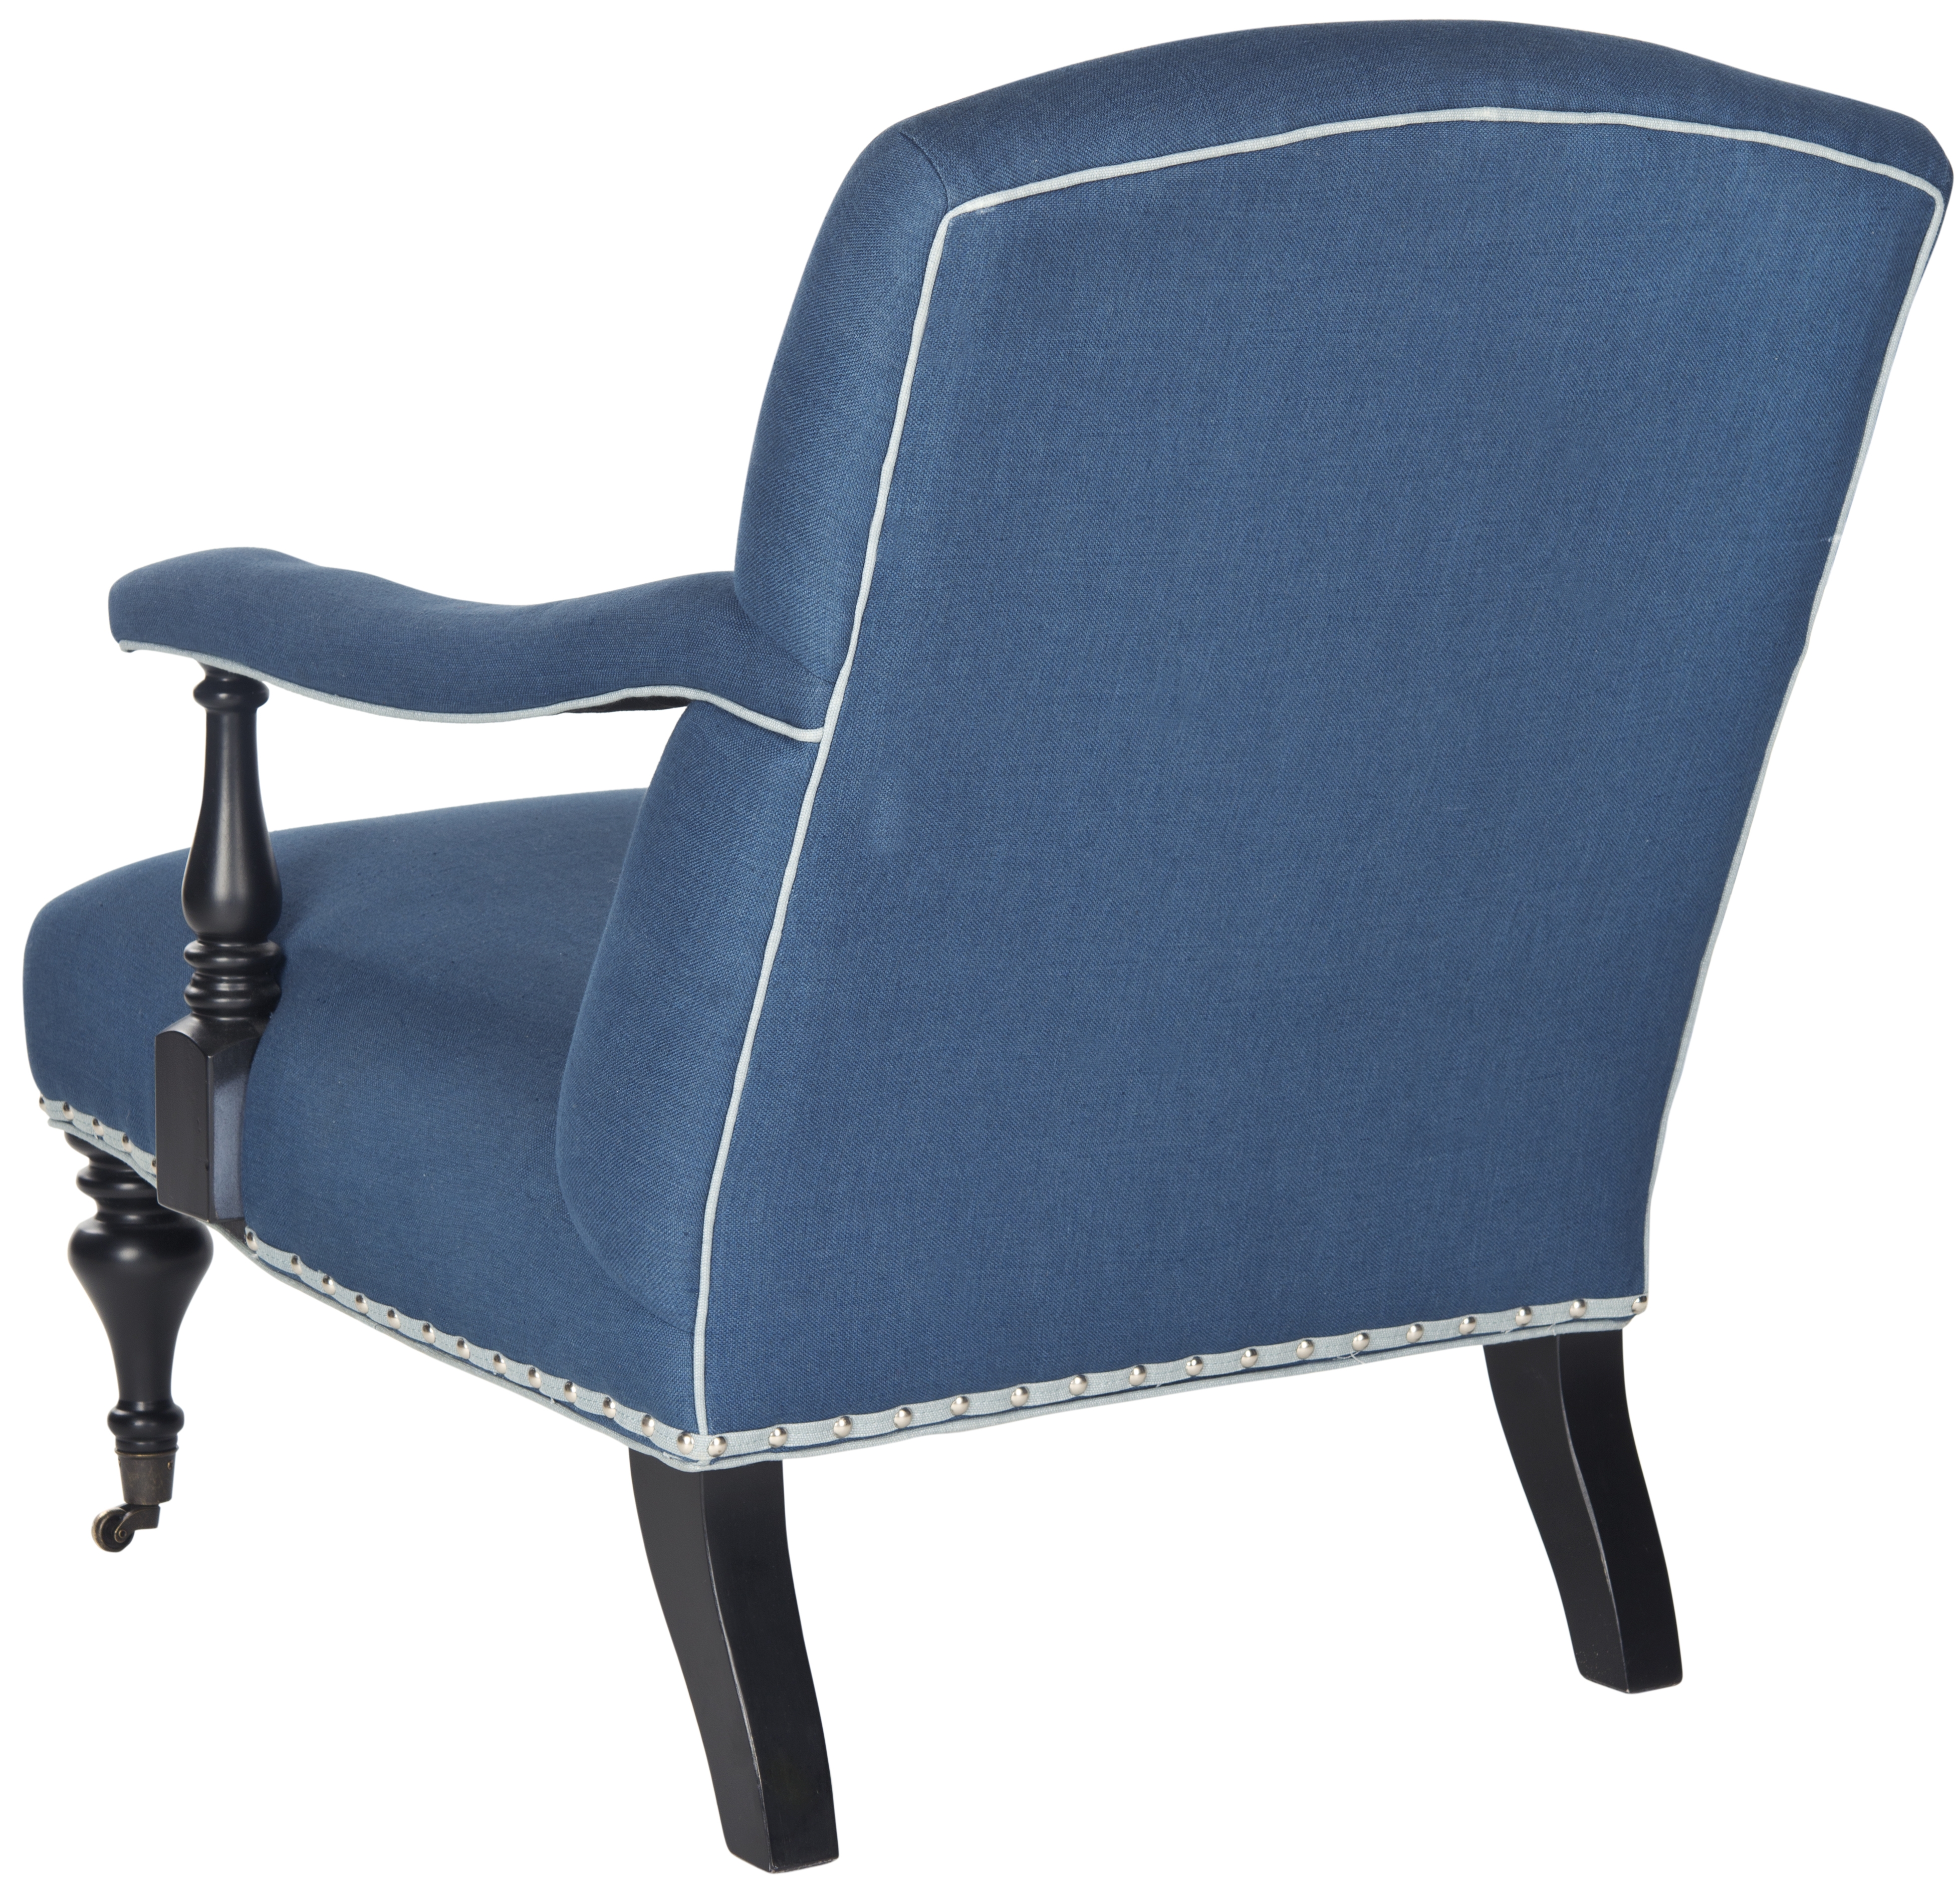 Devona Arm Chair - Silver Nail Heads - Steel Blue/Black - Arlo Home - Image 1